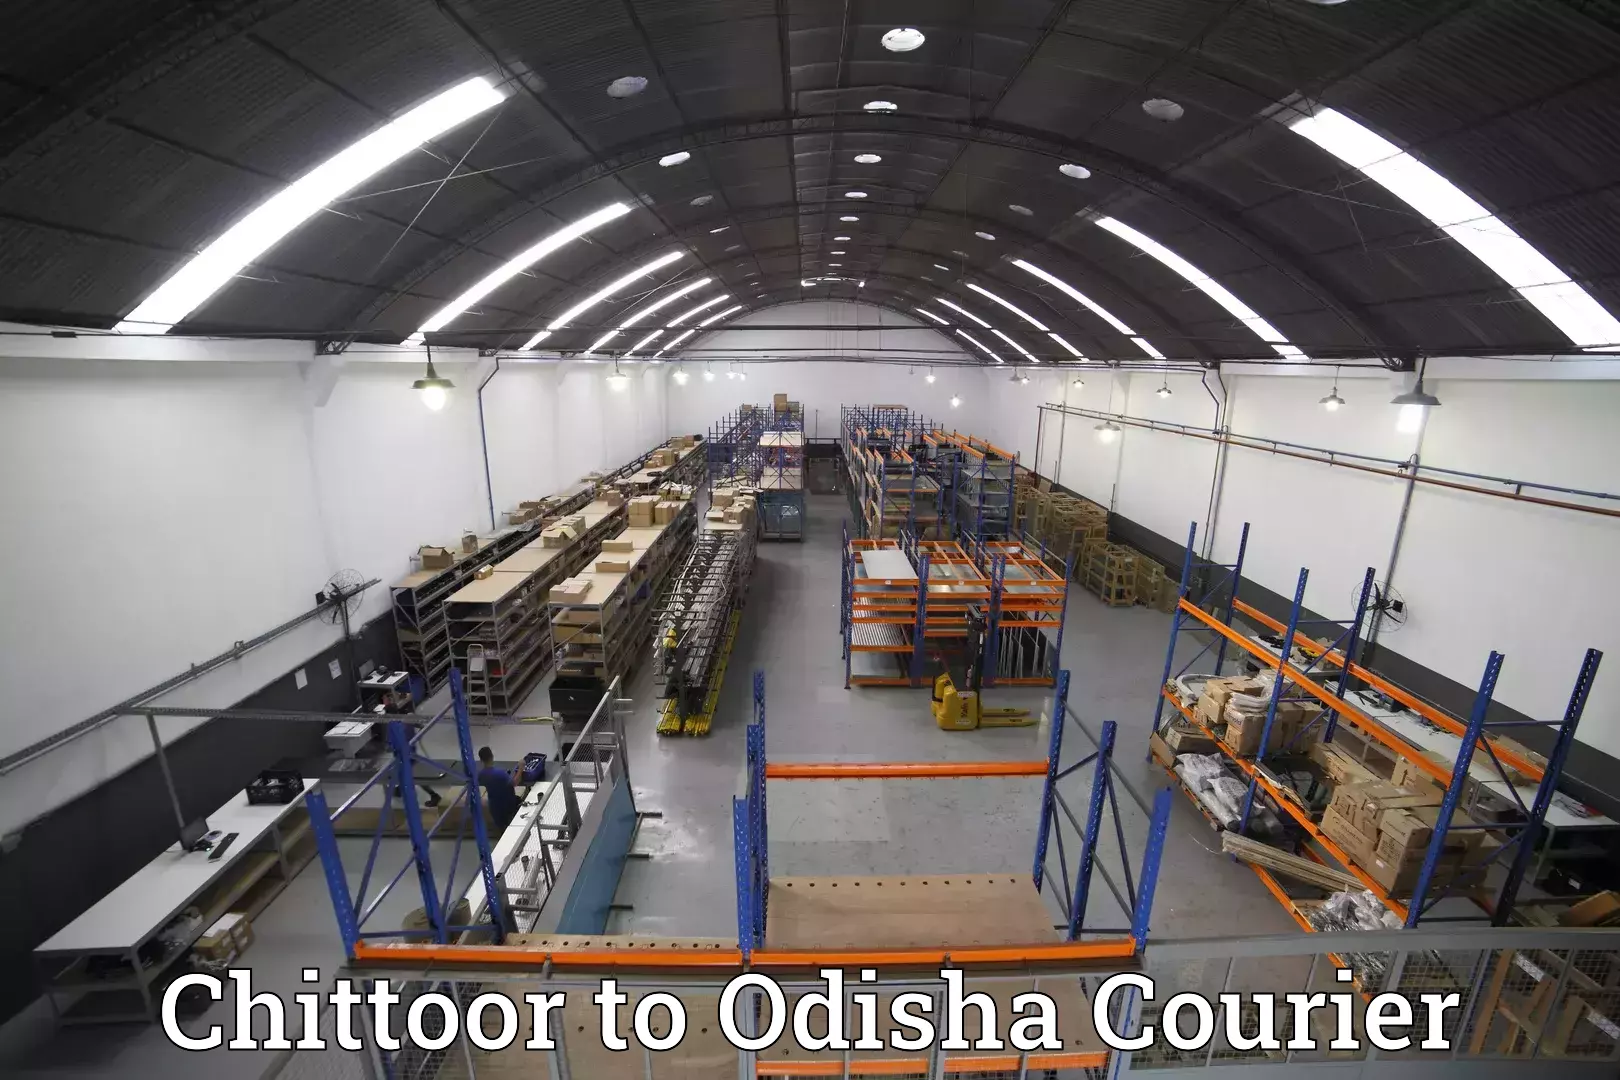 Luggage shipment specialists Chittoor to Odisha